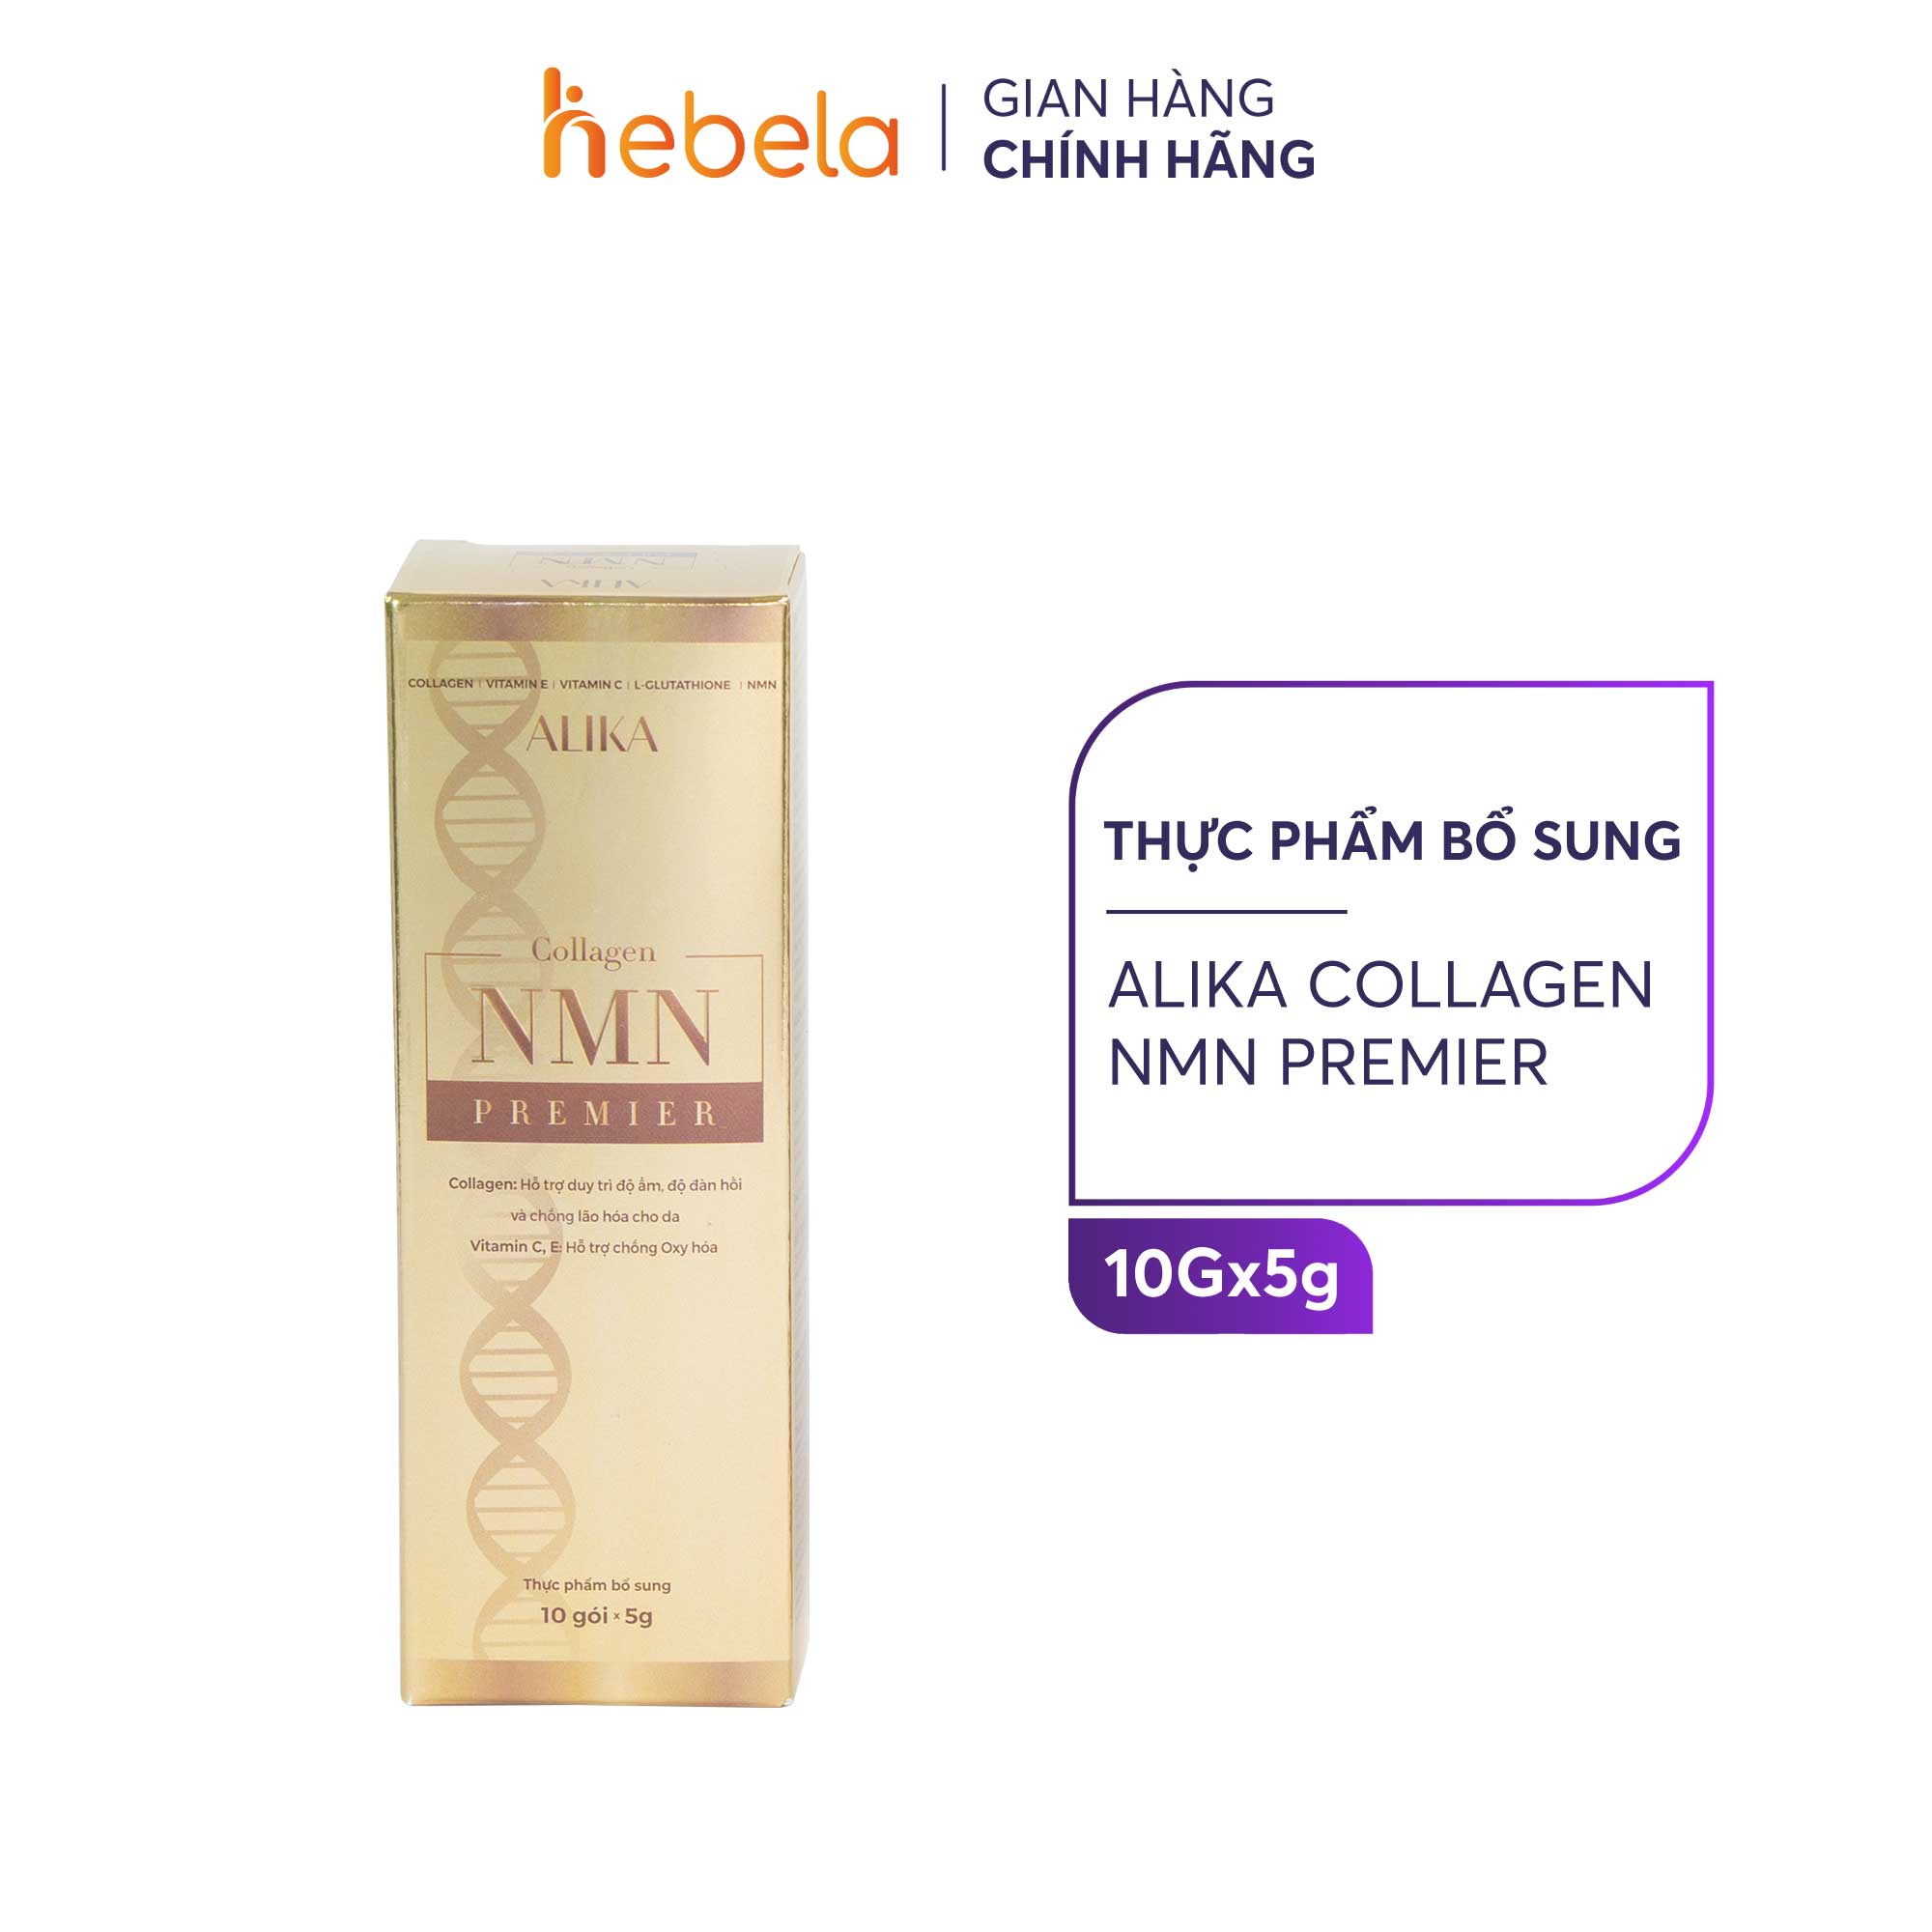 Thực phẩm bổ sung ALIKA Collagen NMN PREMIER